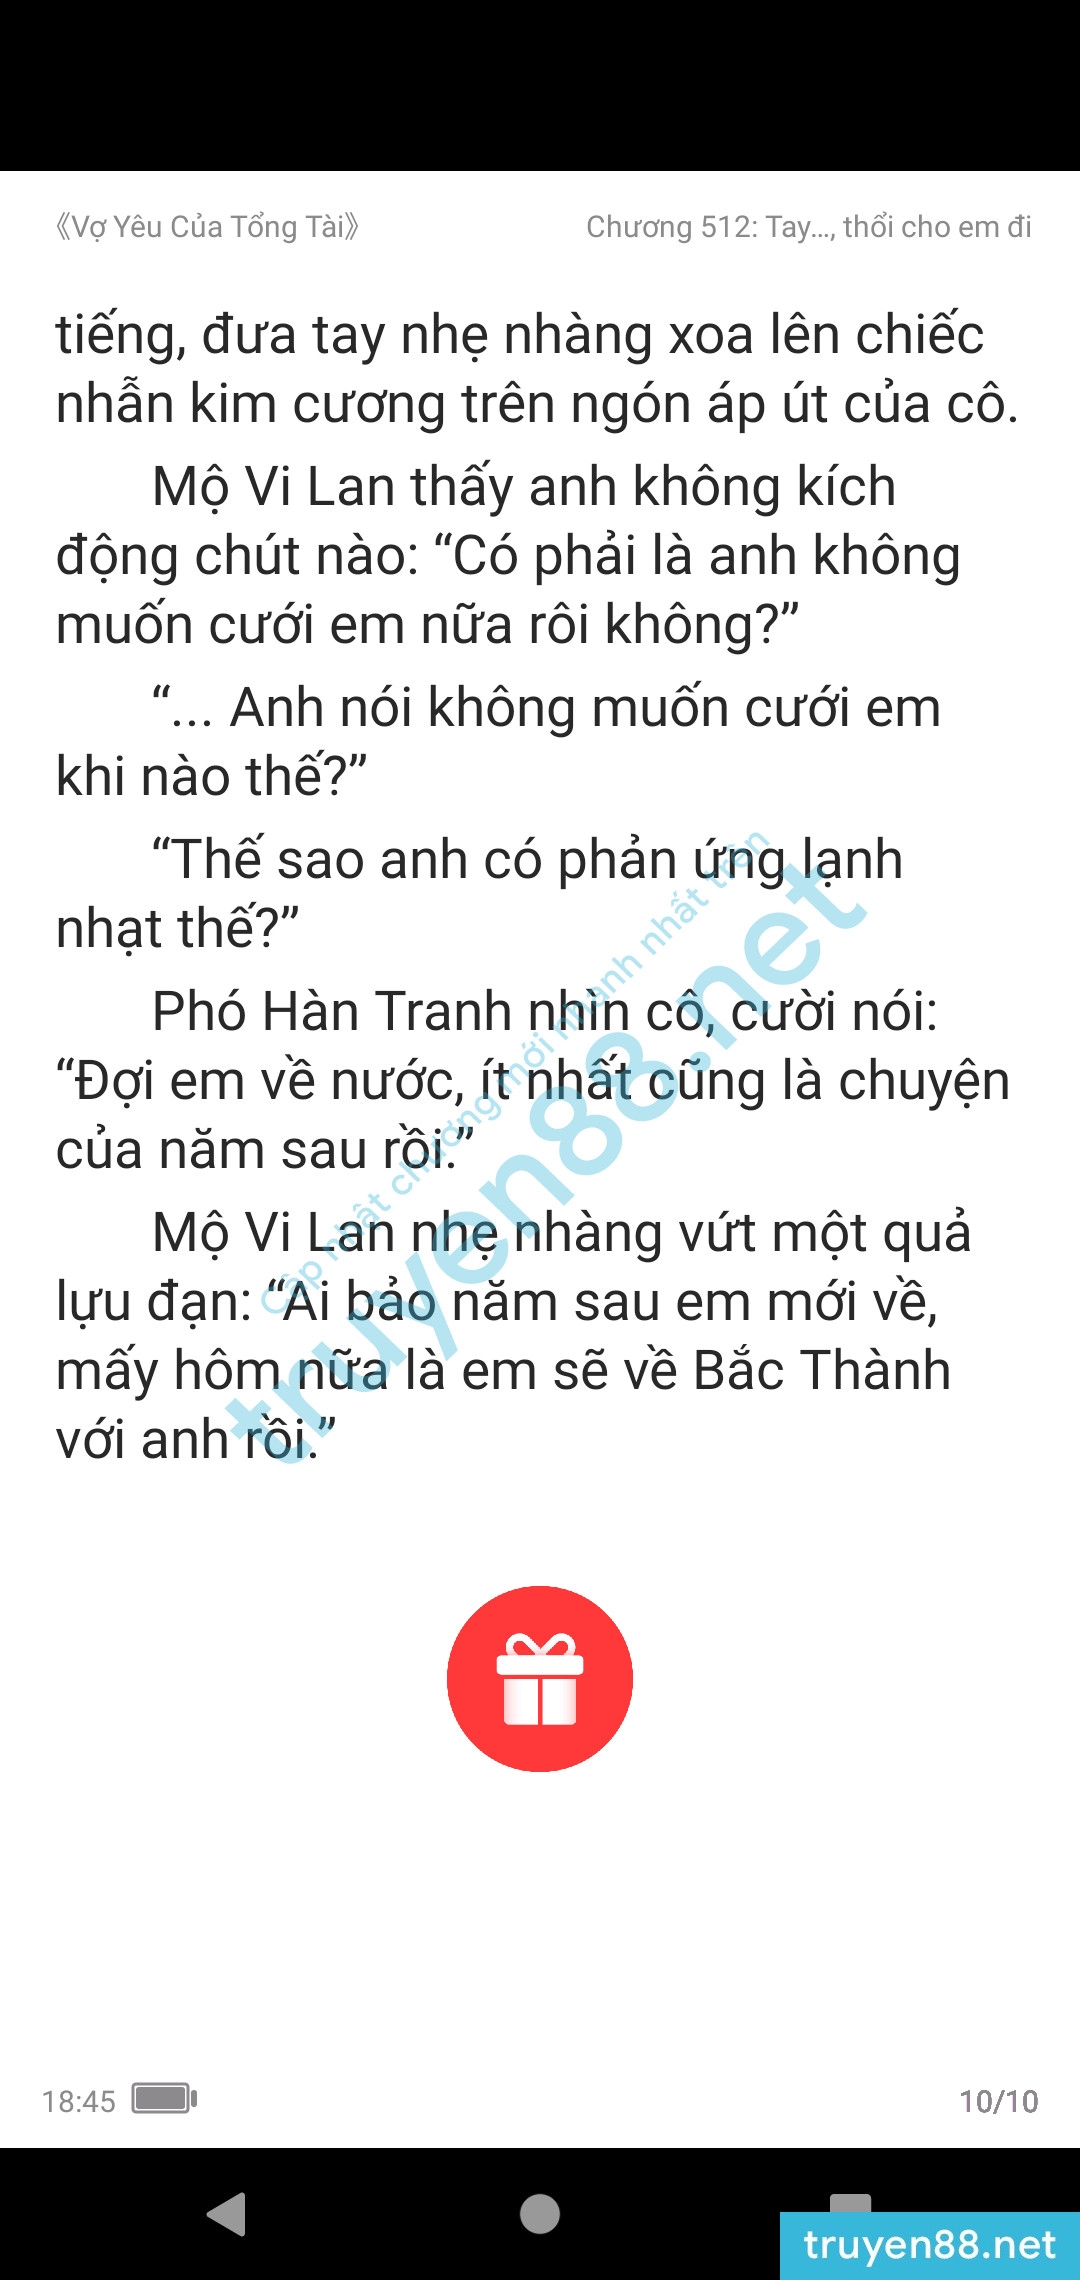 vo-yeu-cua-tong-tai-mo-vi-lan--pho-han-tranh-522-1